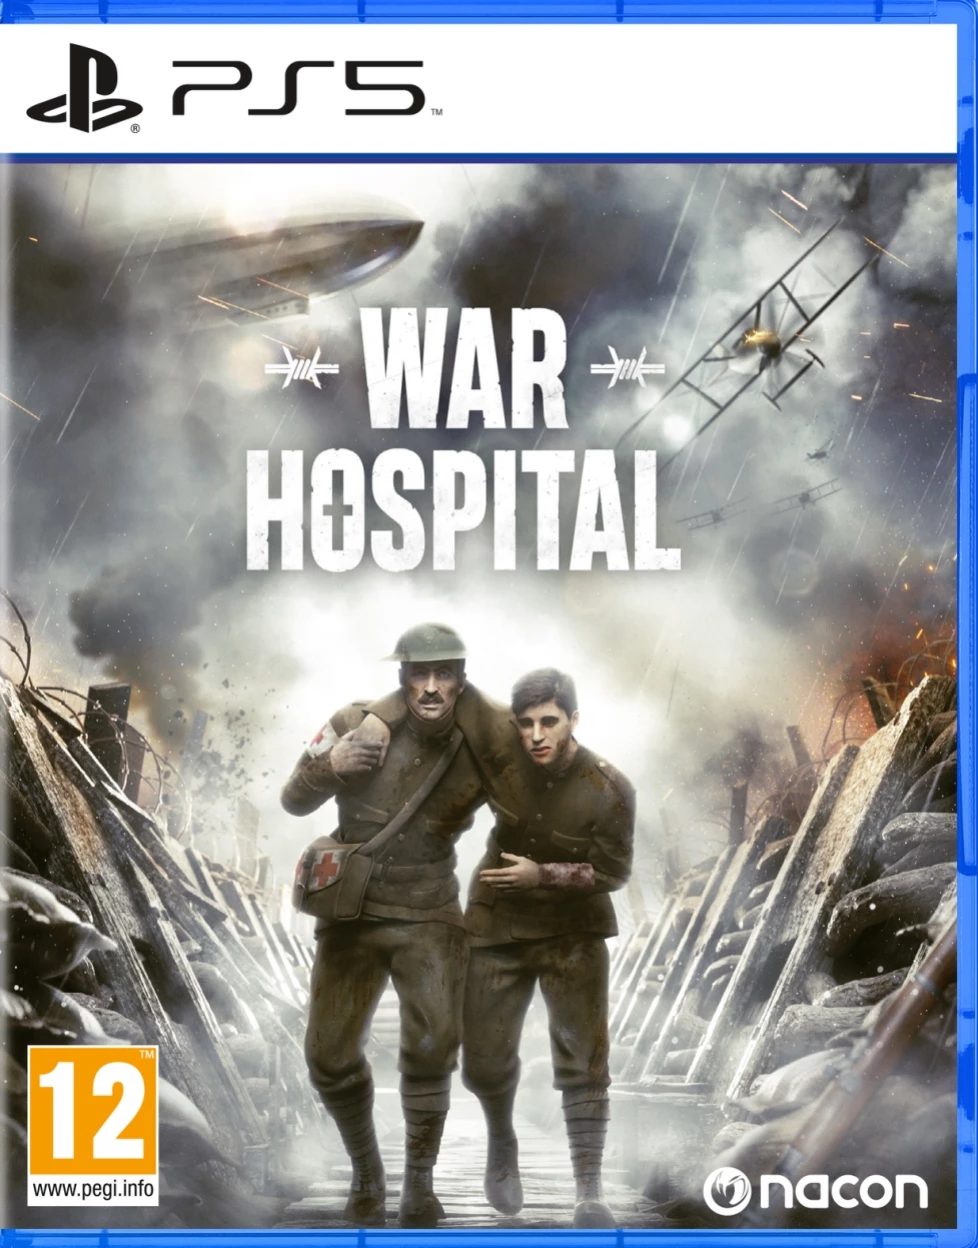 War Hospital